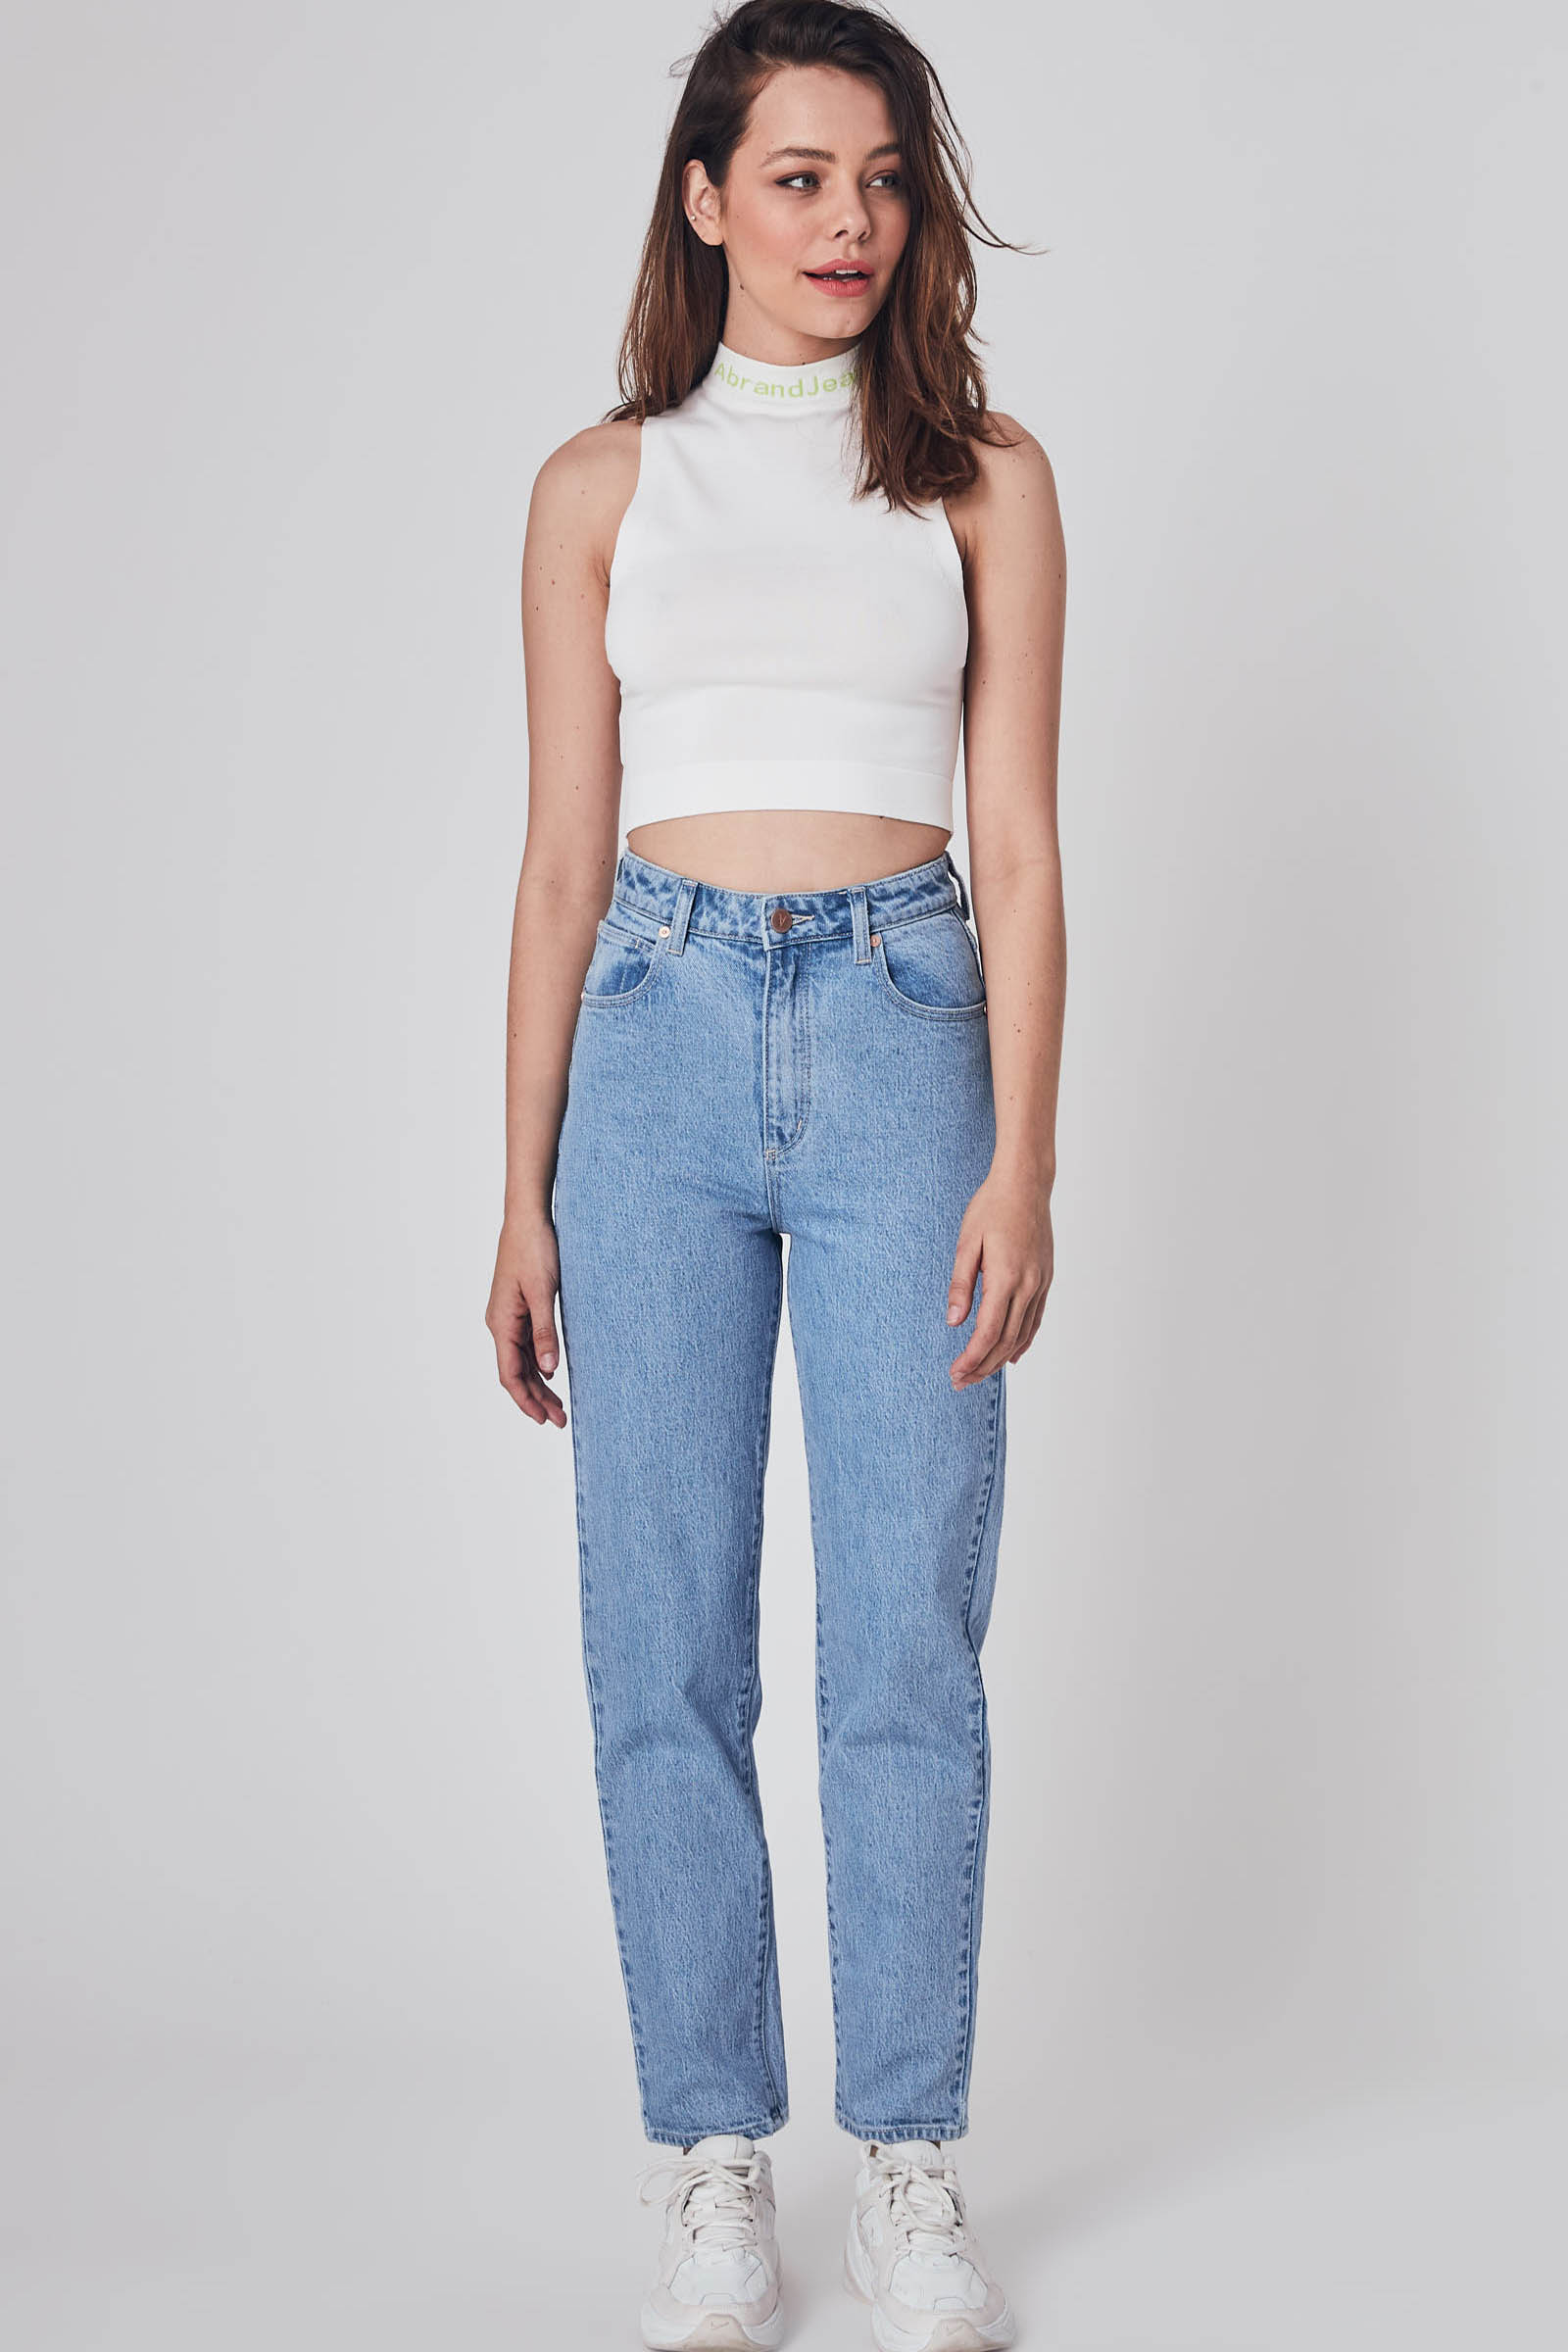 a brand 94 high slim jeans